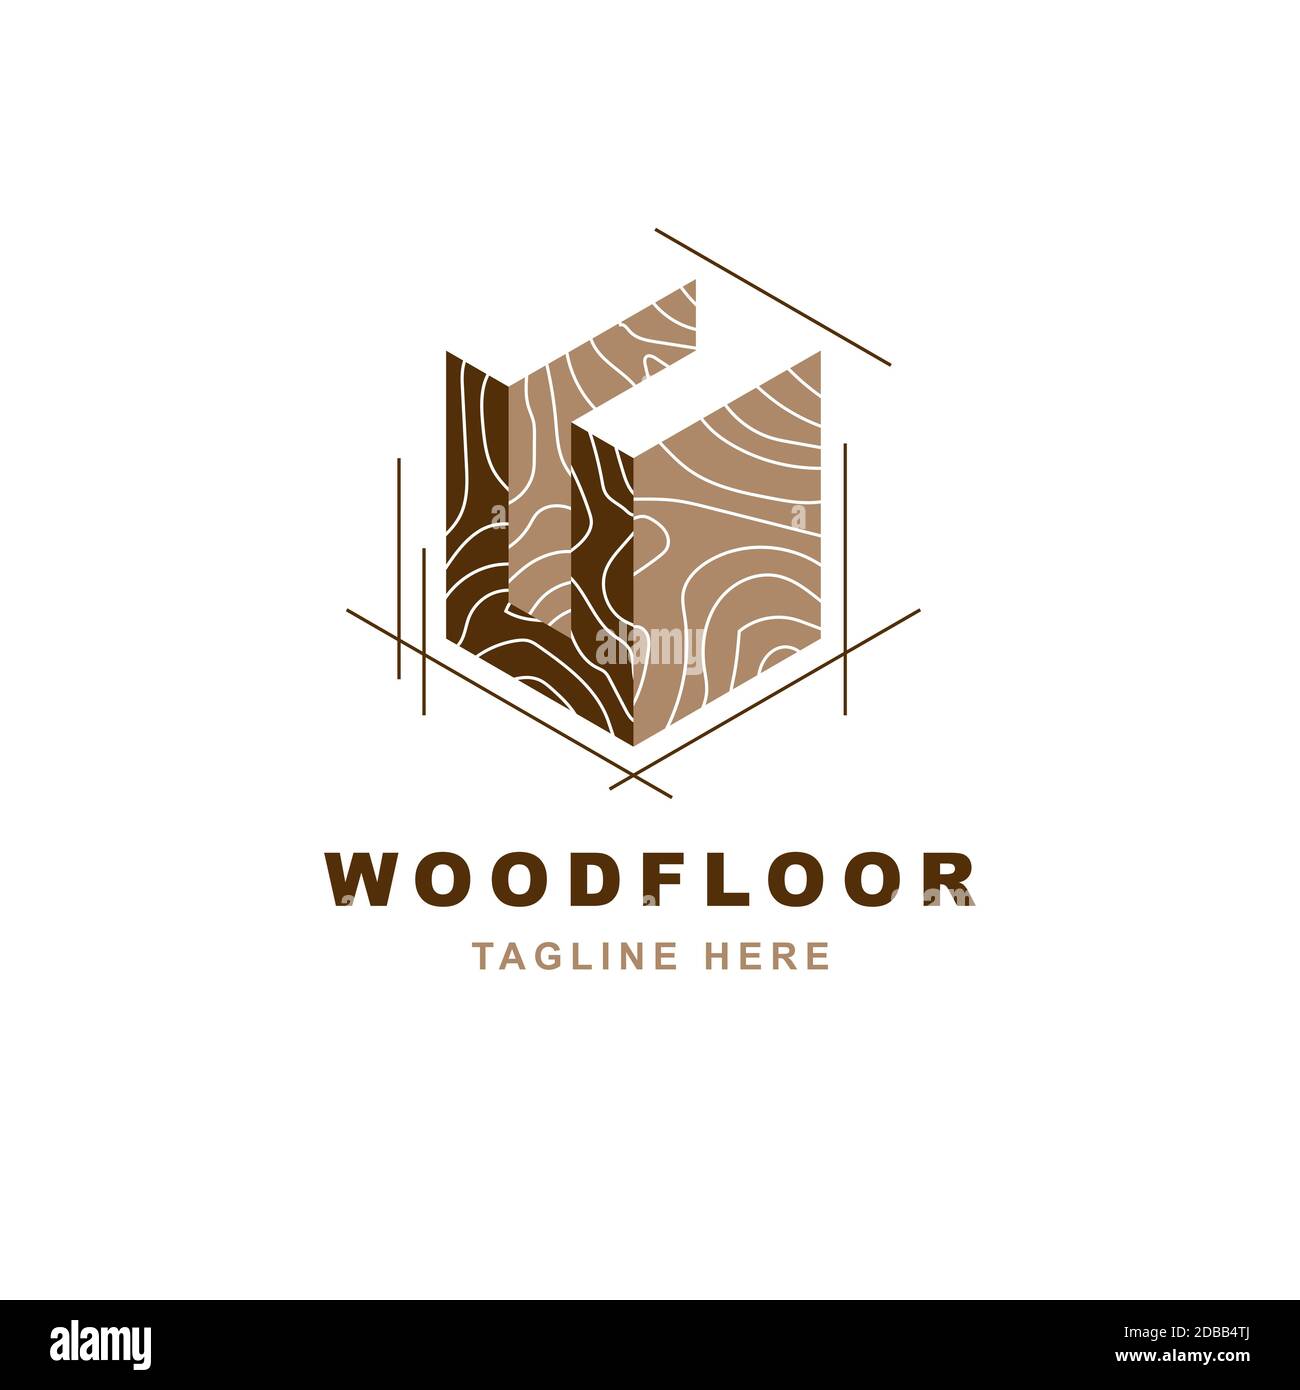 Wood logo with letter u shape illustration vector design template Stock Vector